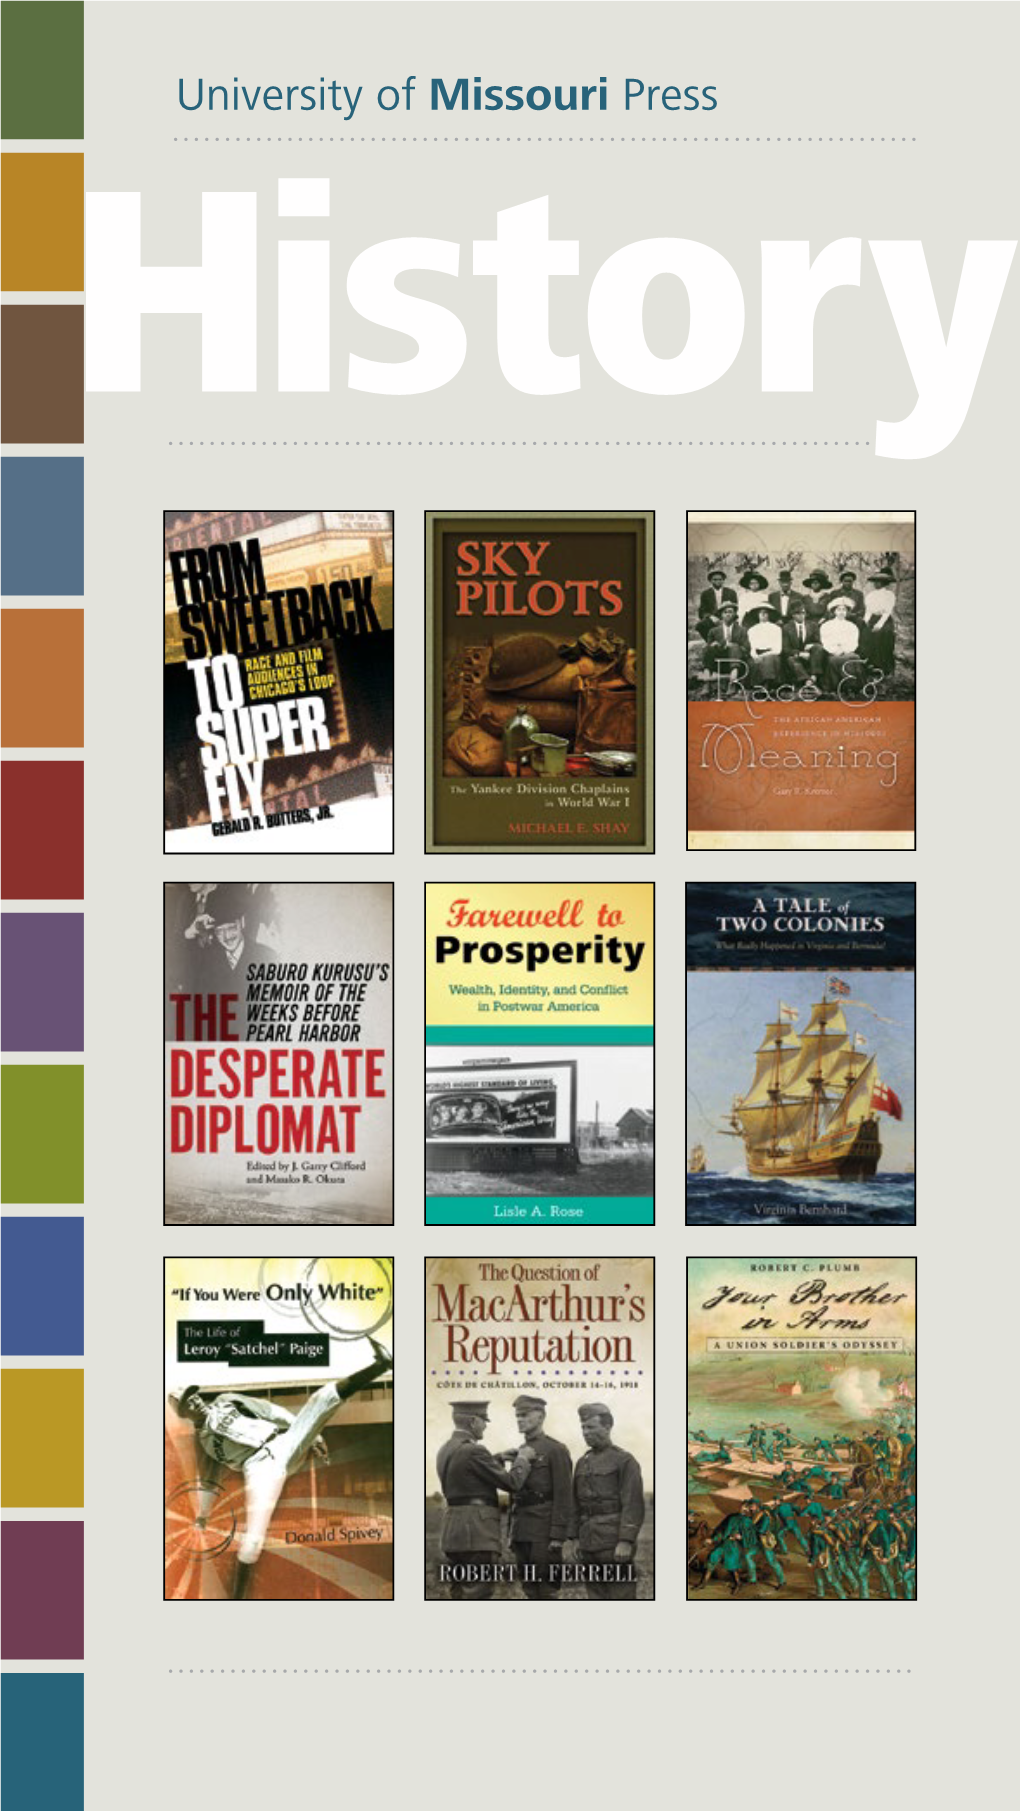 University of Missouri Press History Contents